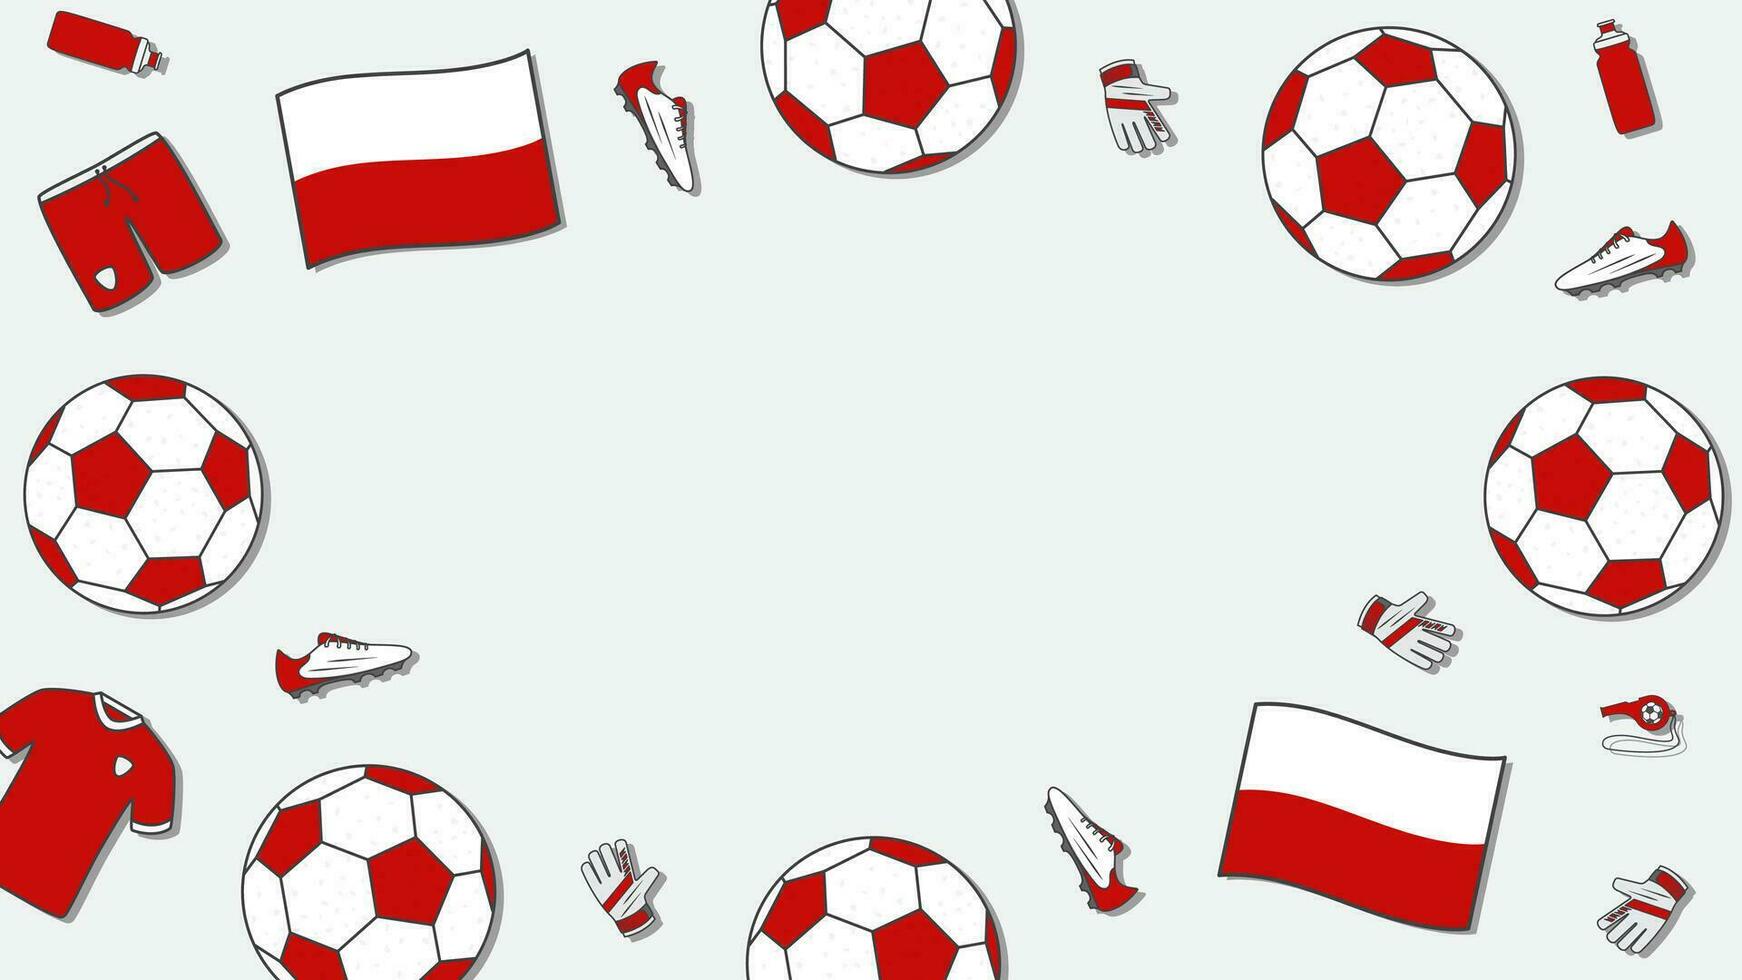 Football Background Design Template. Football Cartoon Vector Illustration. Tournament In Poland